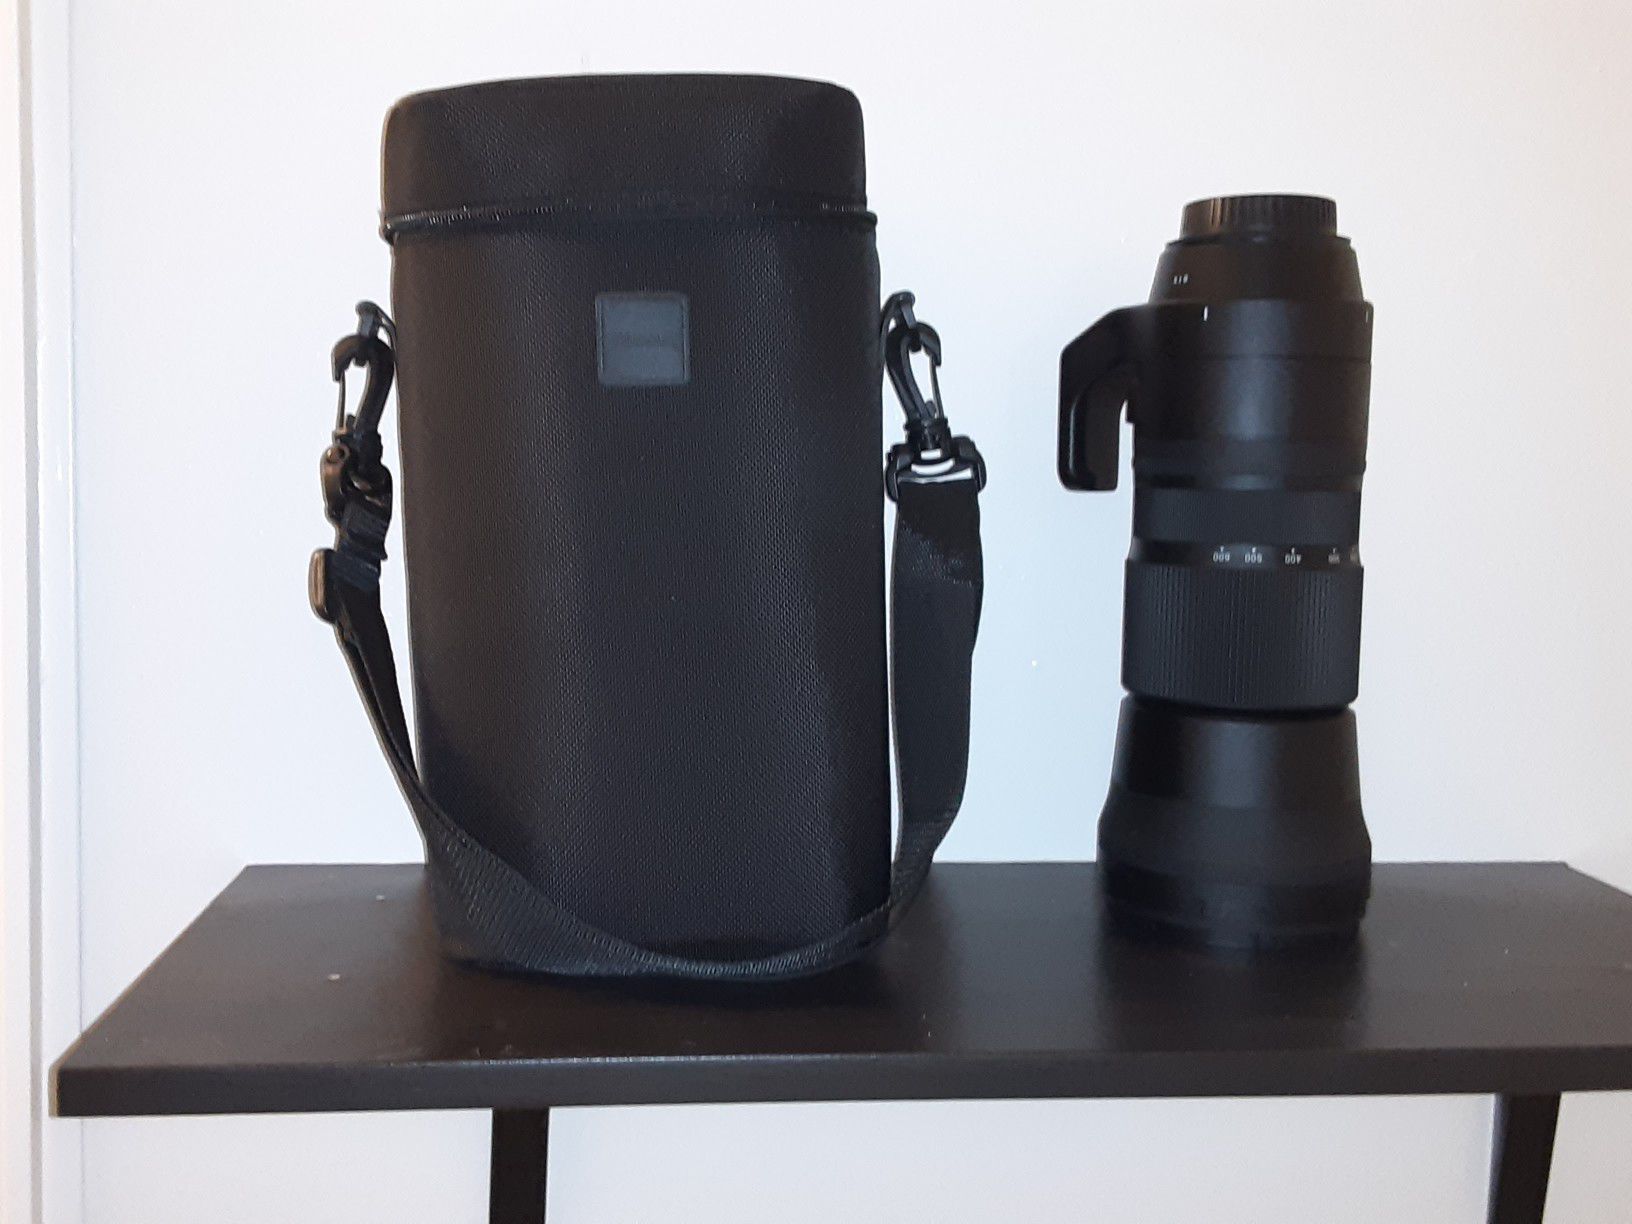 Sigma 150-600mm Fs-6.3 DG OS HSM Sport Lens For Canon Cameras